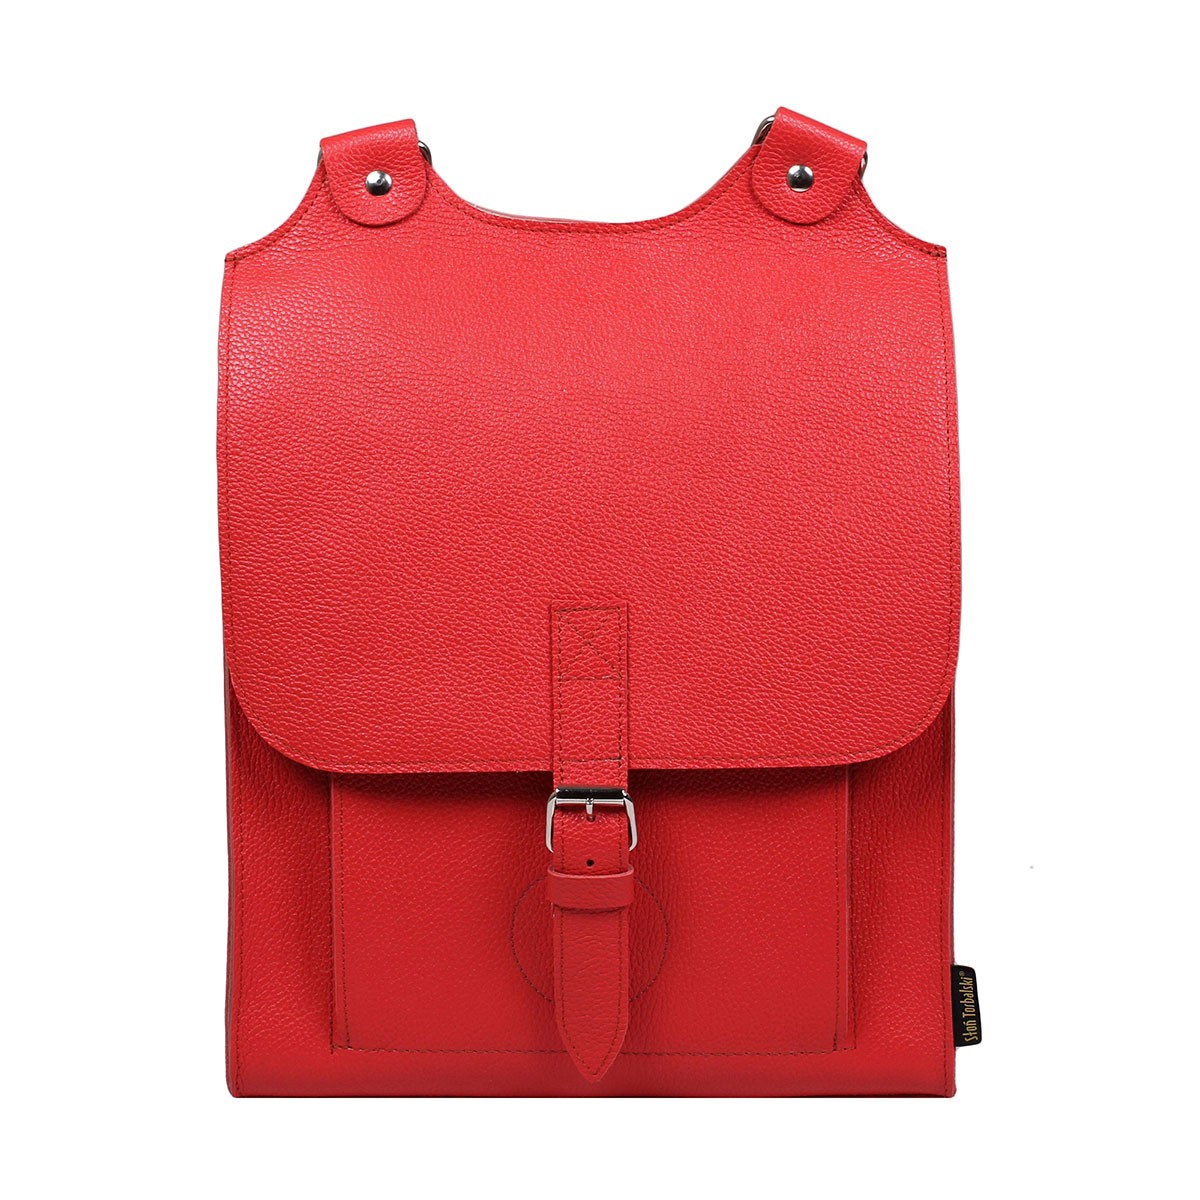 czerwony-plecak-damski-skorzany-vintage-Bookpack-00-09-0909-E10-91155.jpg